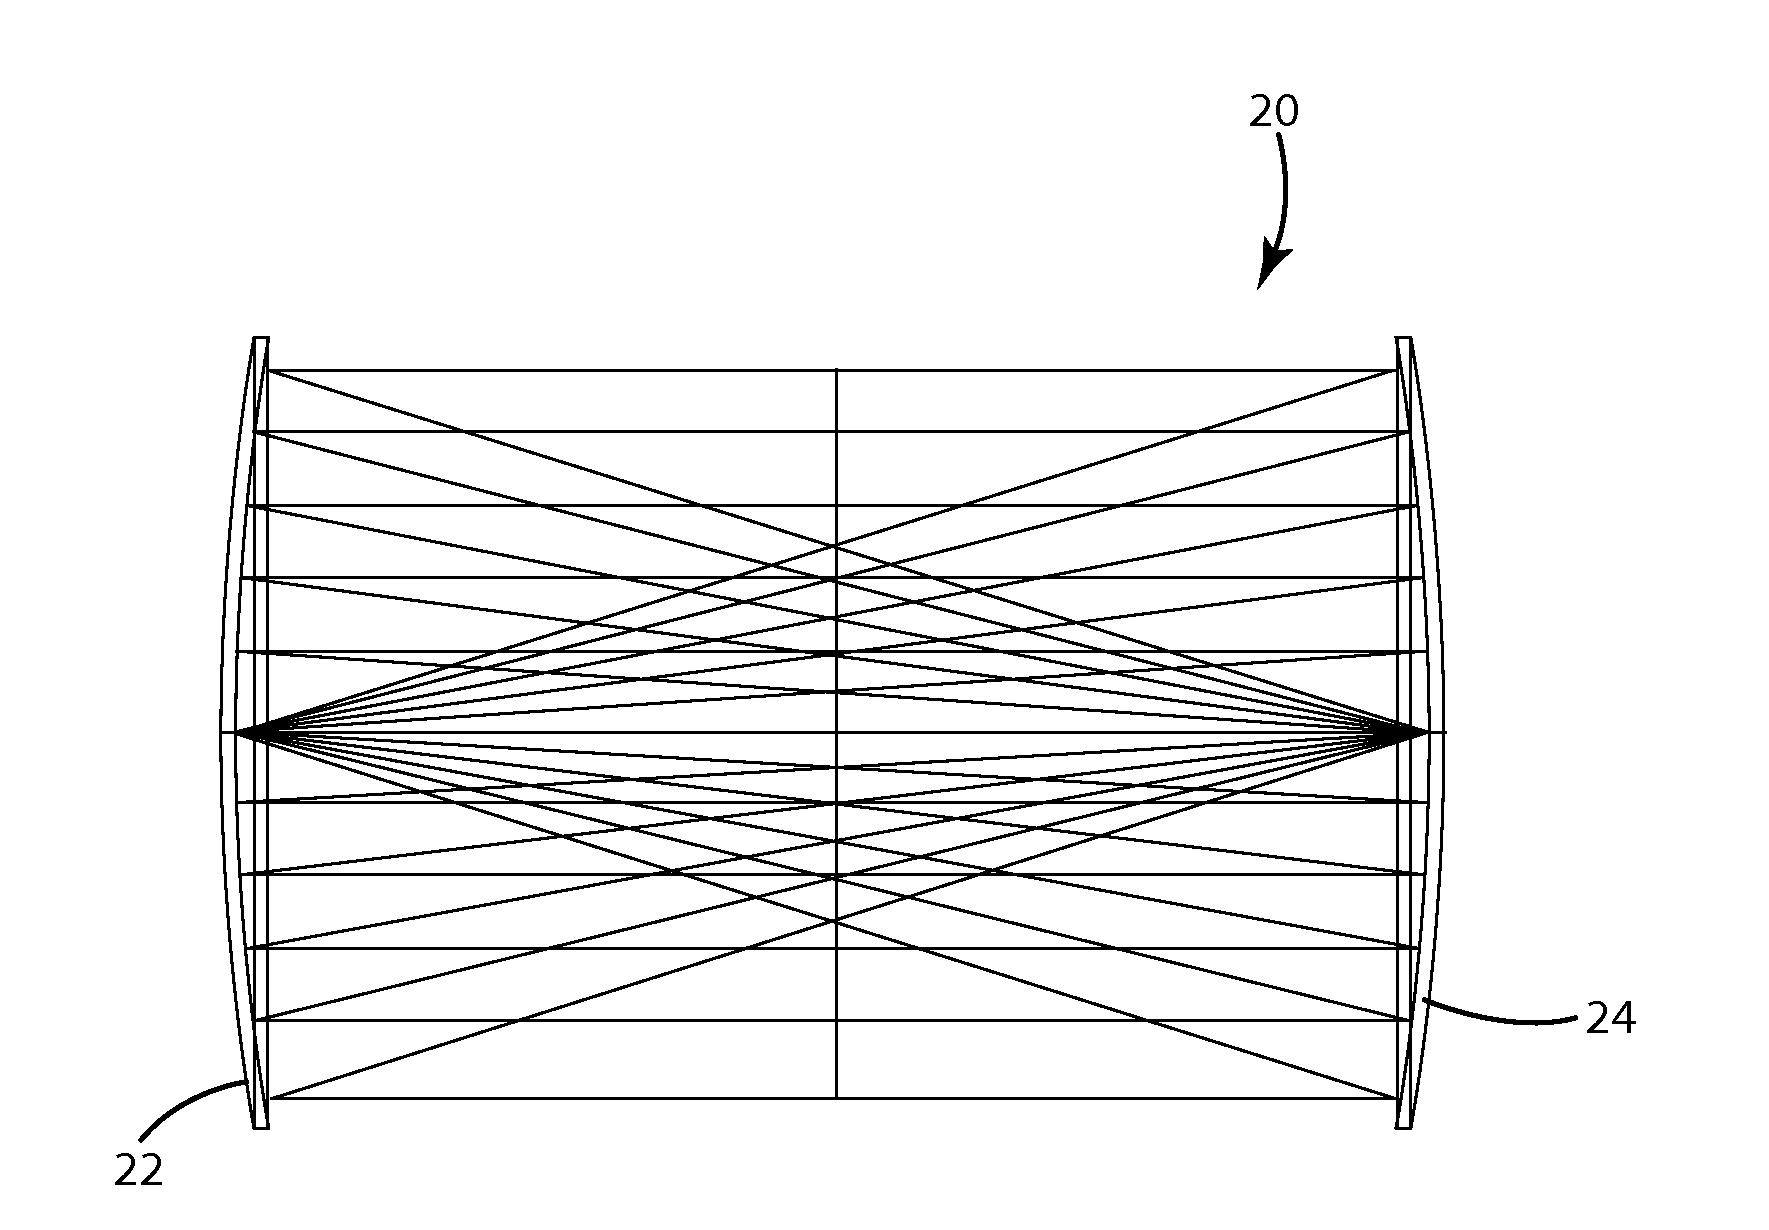 Constrained folded path resonant white light scintillator